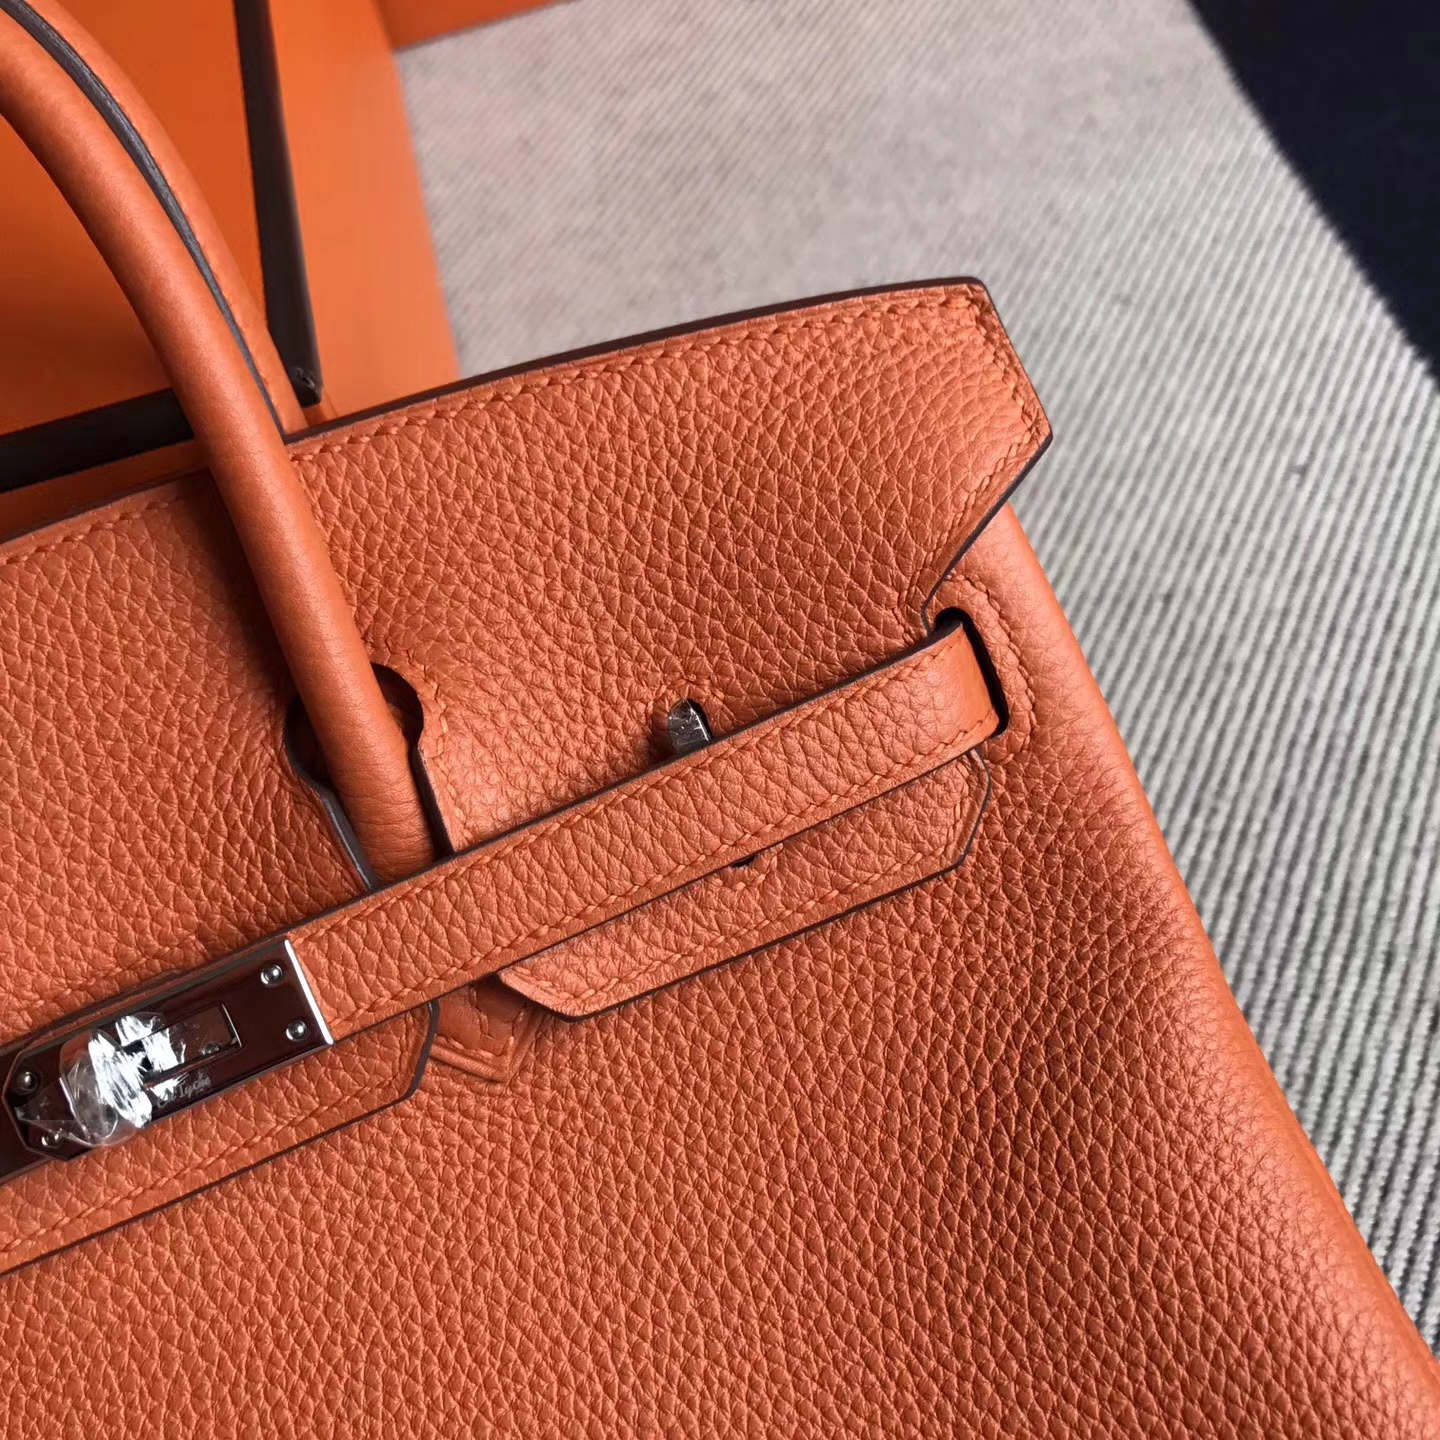 Pretty Hermes Togo Calfskin Birkin25cm Bag in 93 Orange Silver Hardware